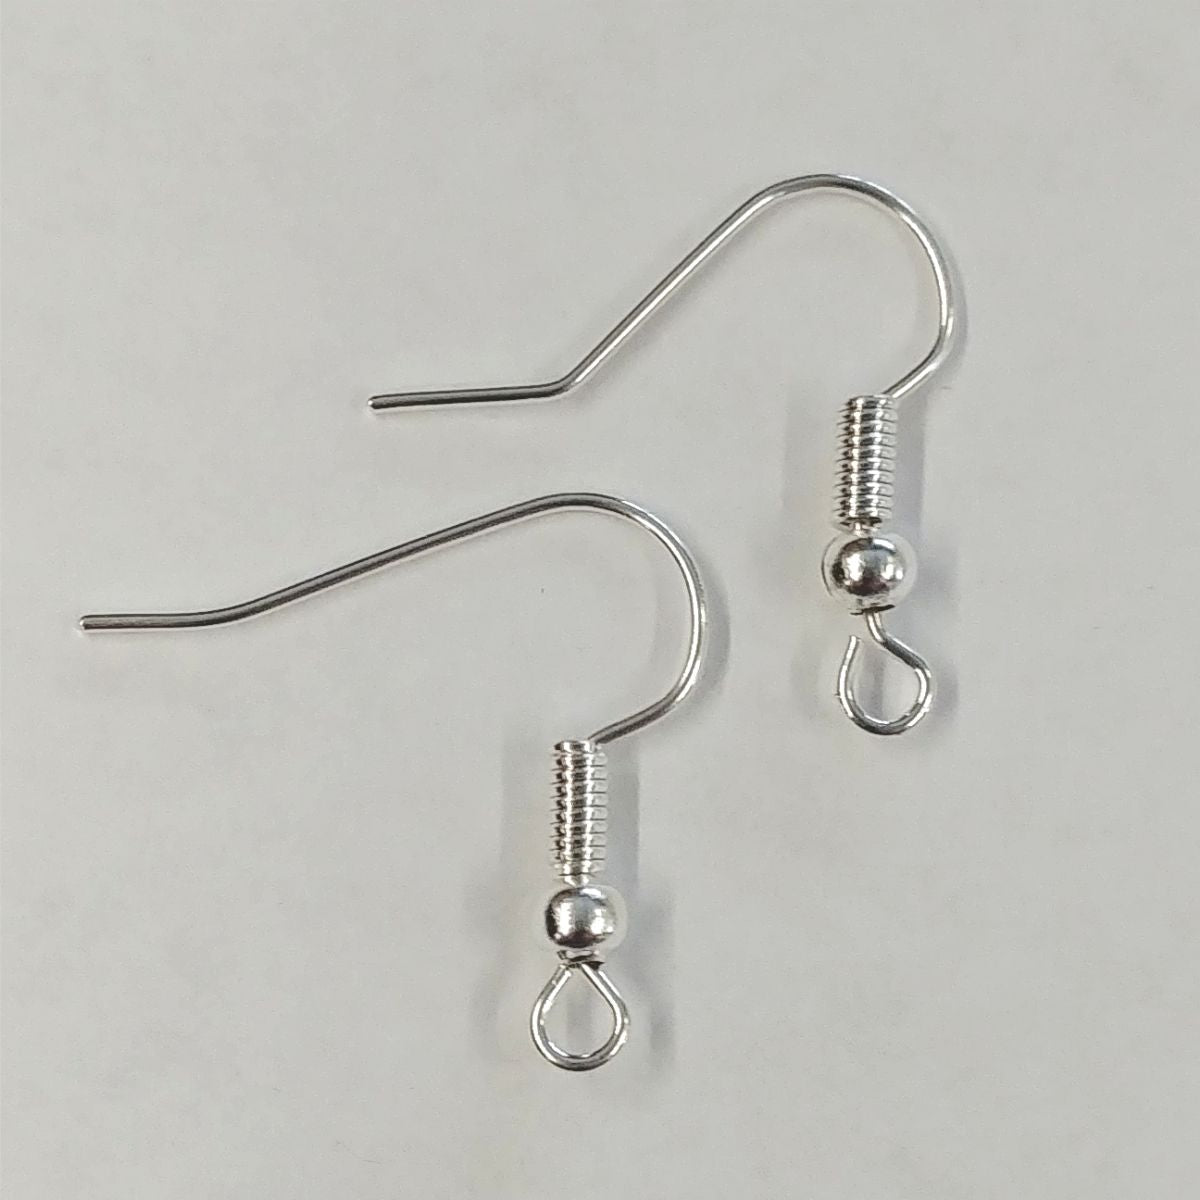 Stainless Steel Silver Tone Earrings Hooks Hypo-Allergenic (2 Earrings, 1 Pair) - CraftCutterSupply.com